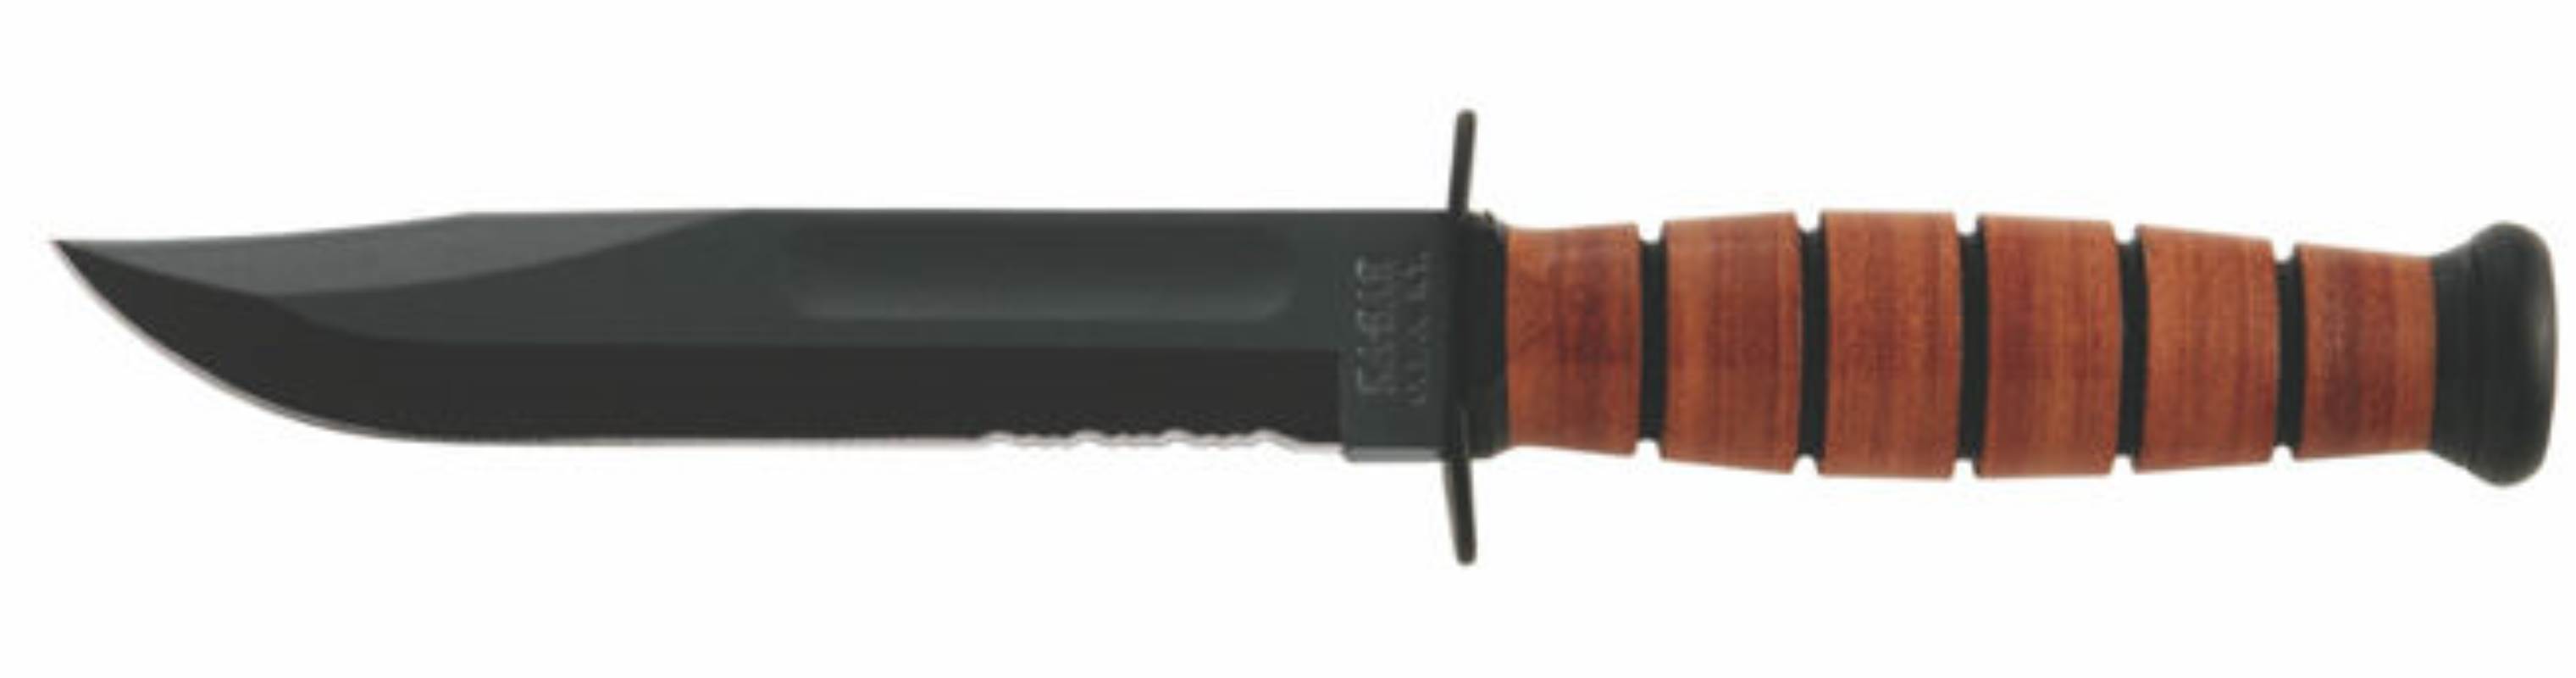 USA Short Serrated Knife